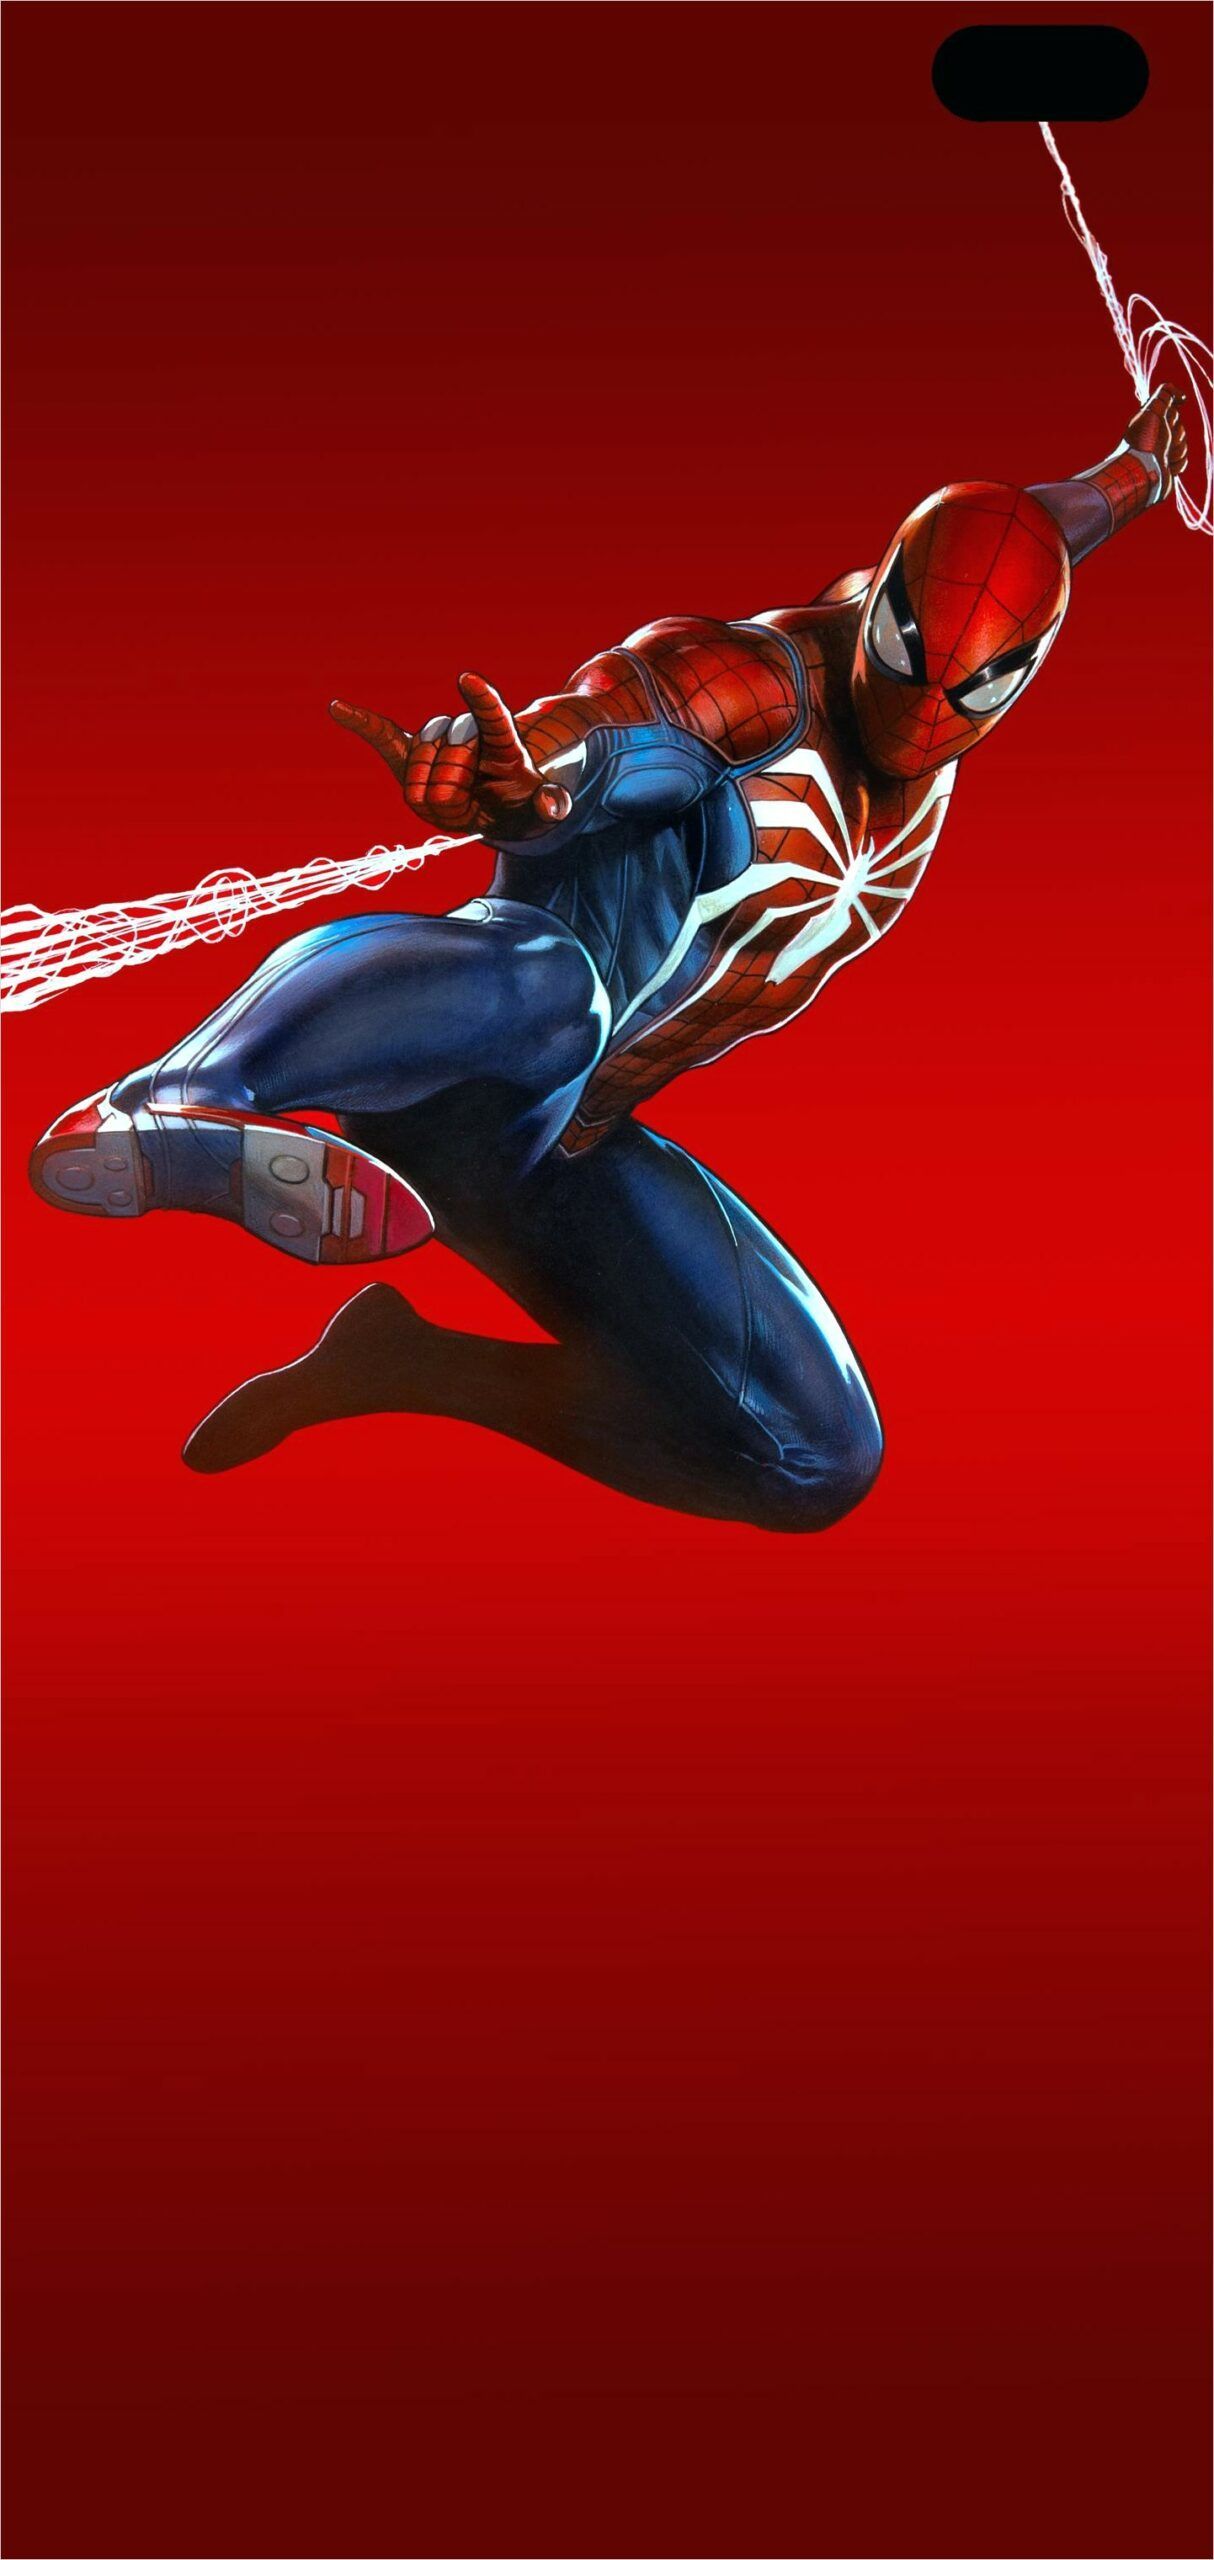 4k Galaxy S10 Plus Spiderman Wallpaper em 2020. Samsung papel de